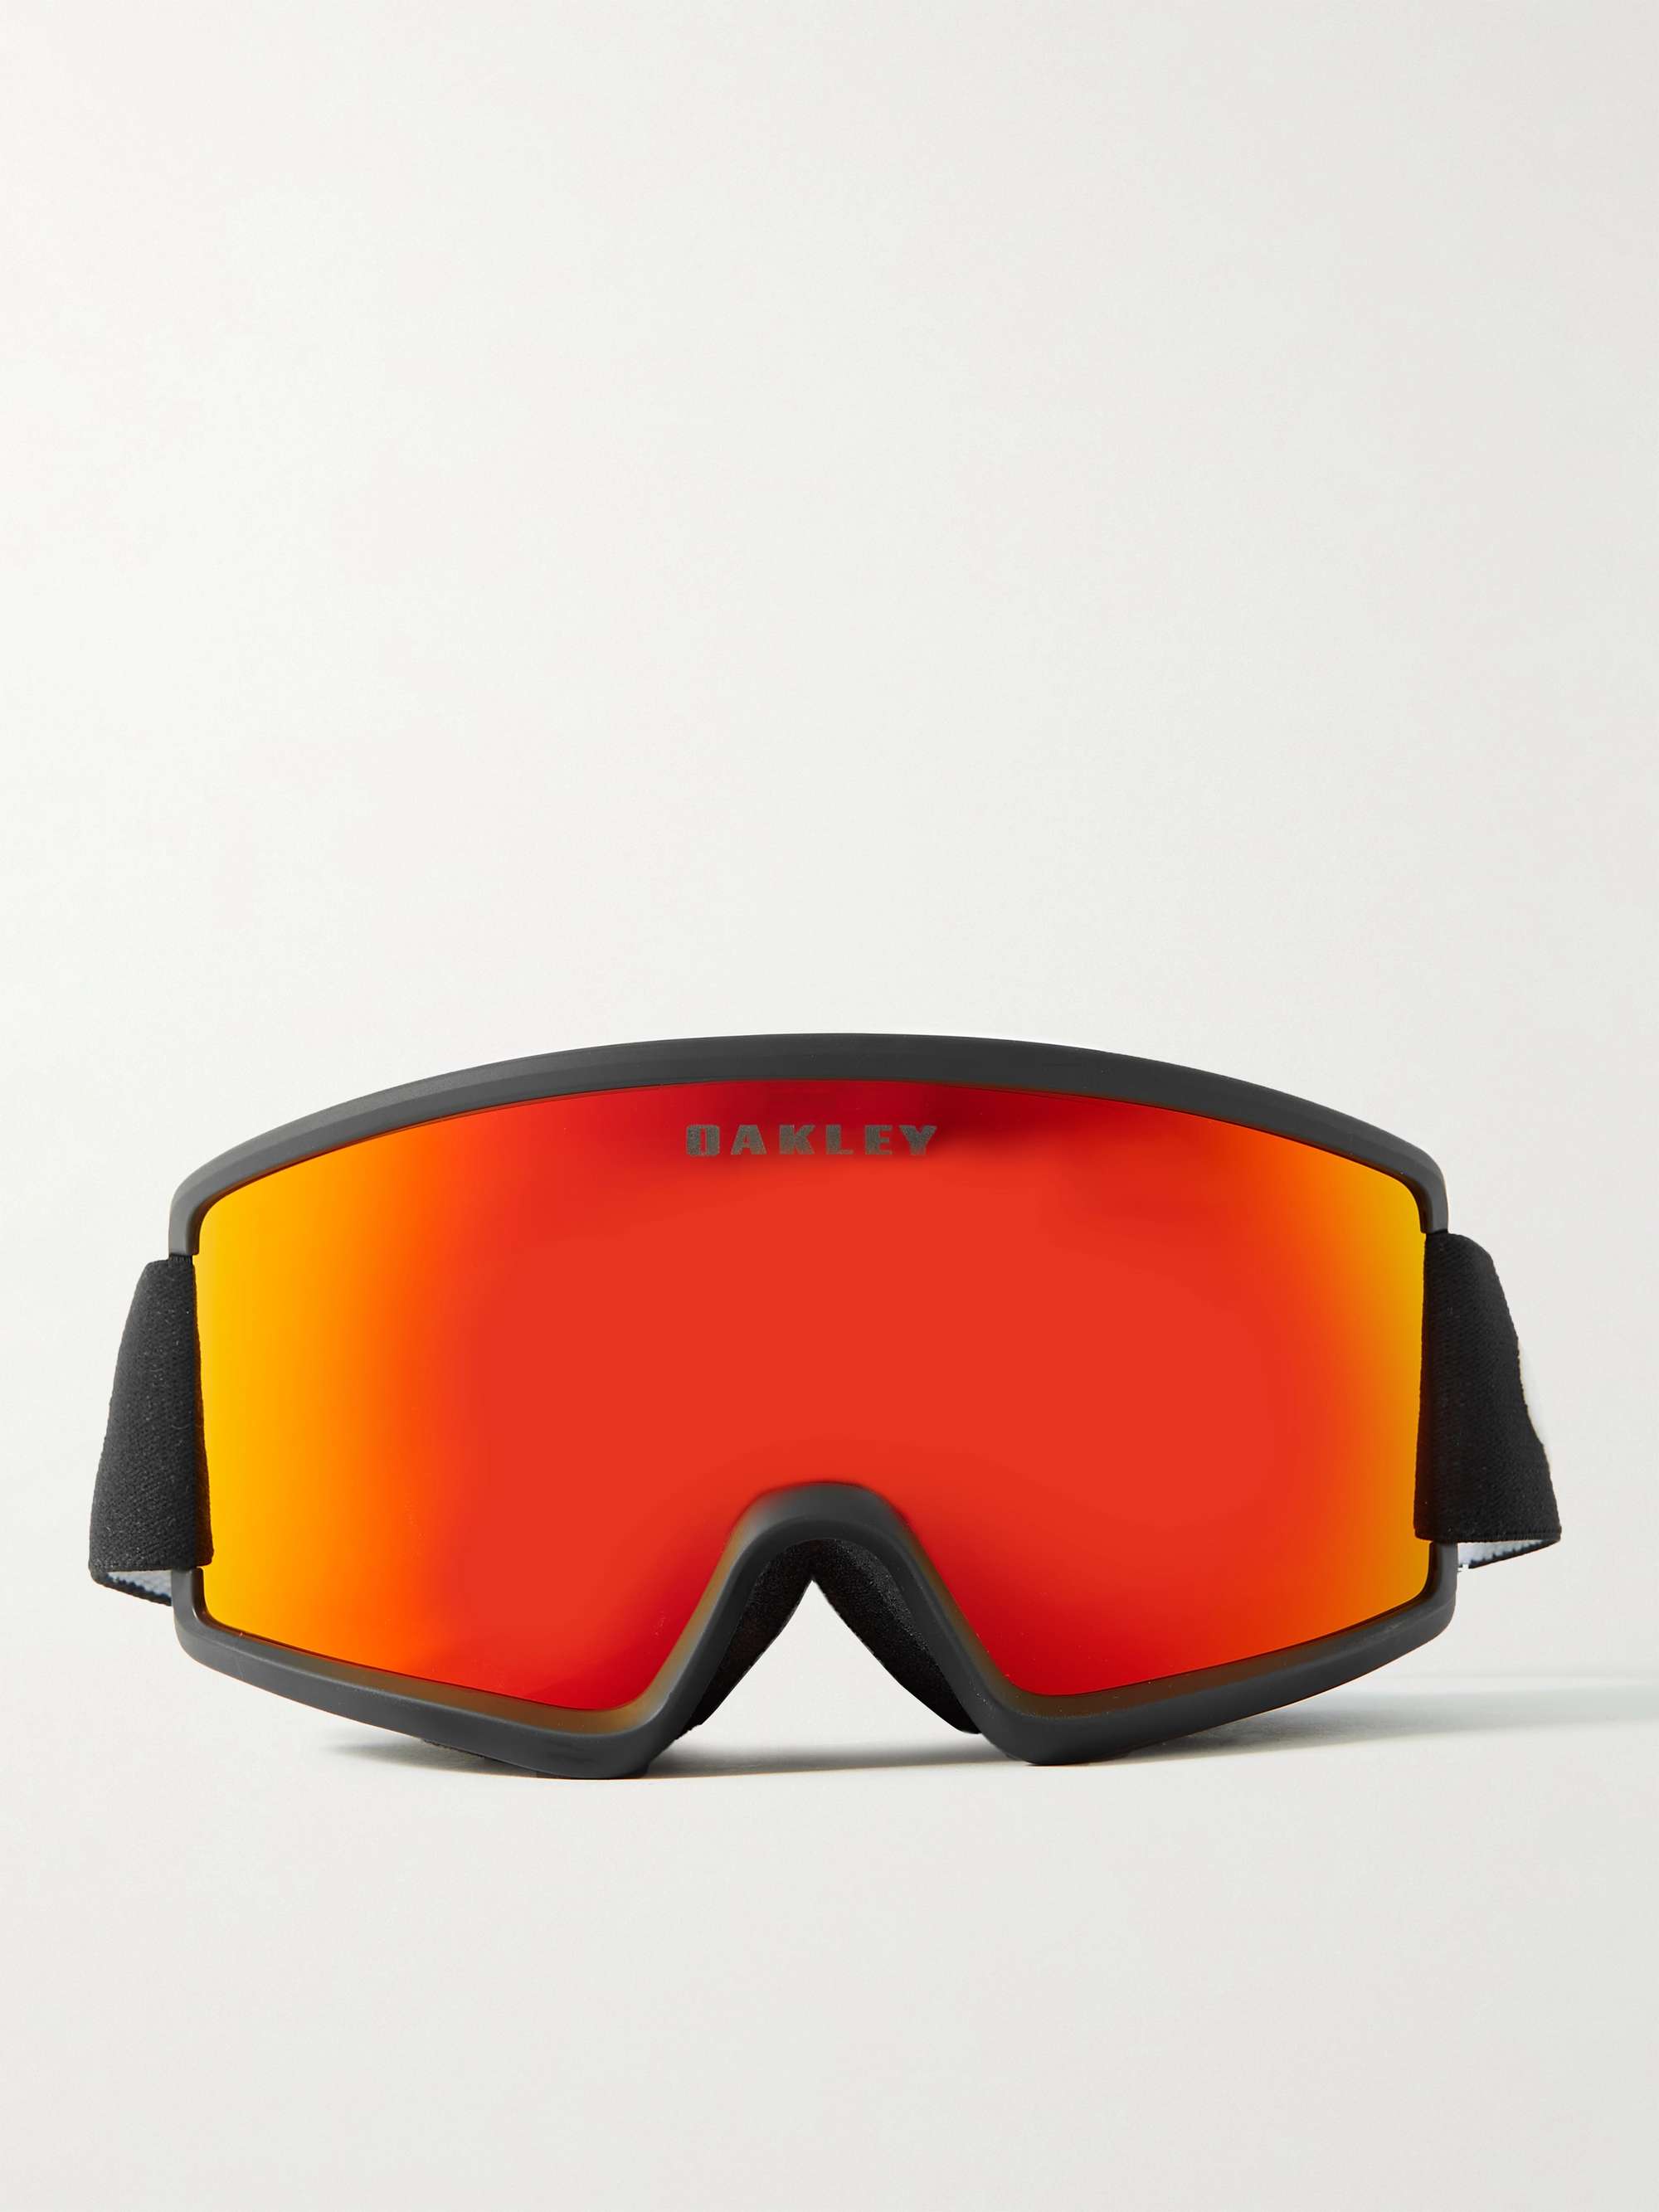 OAKLEY Target Line S Ski Goggles